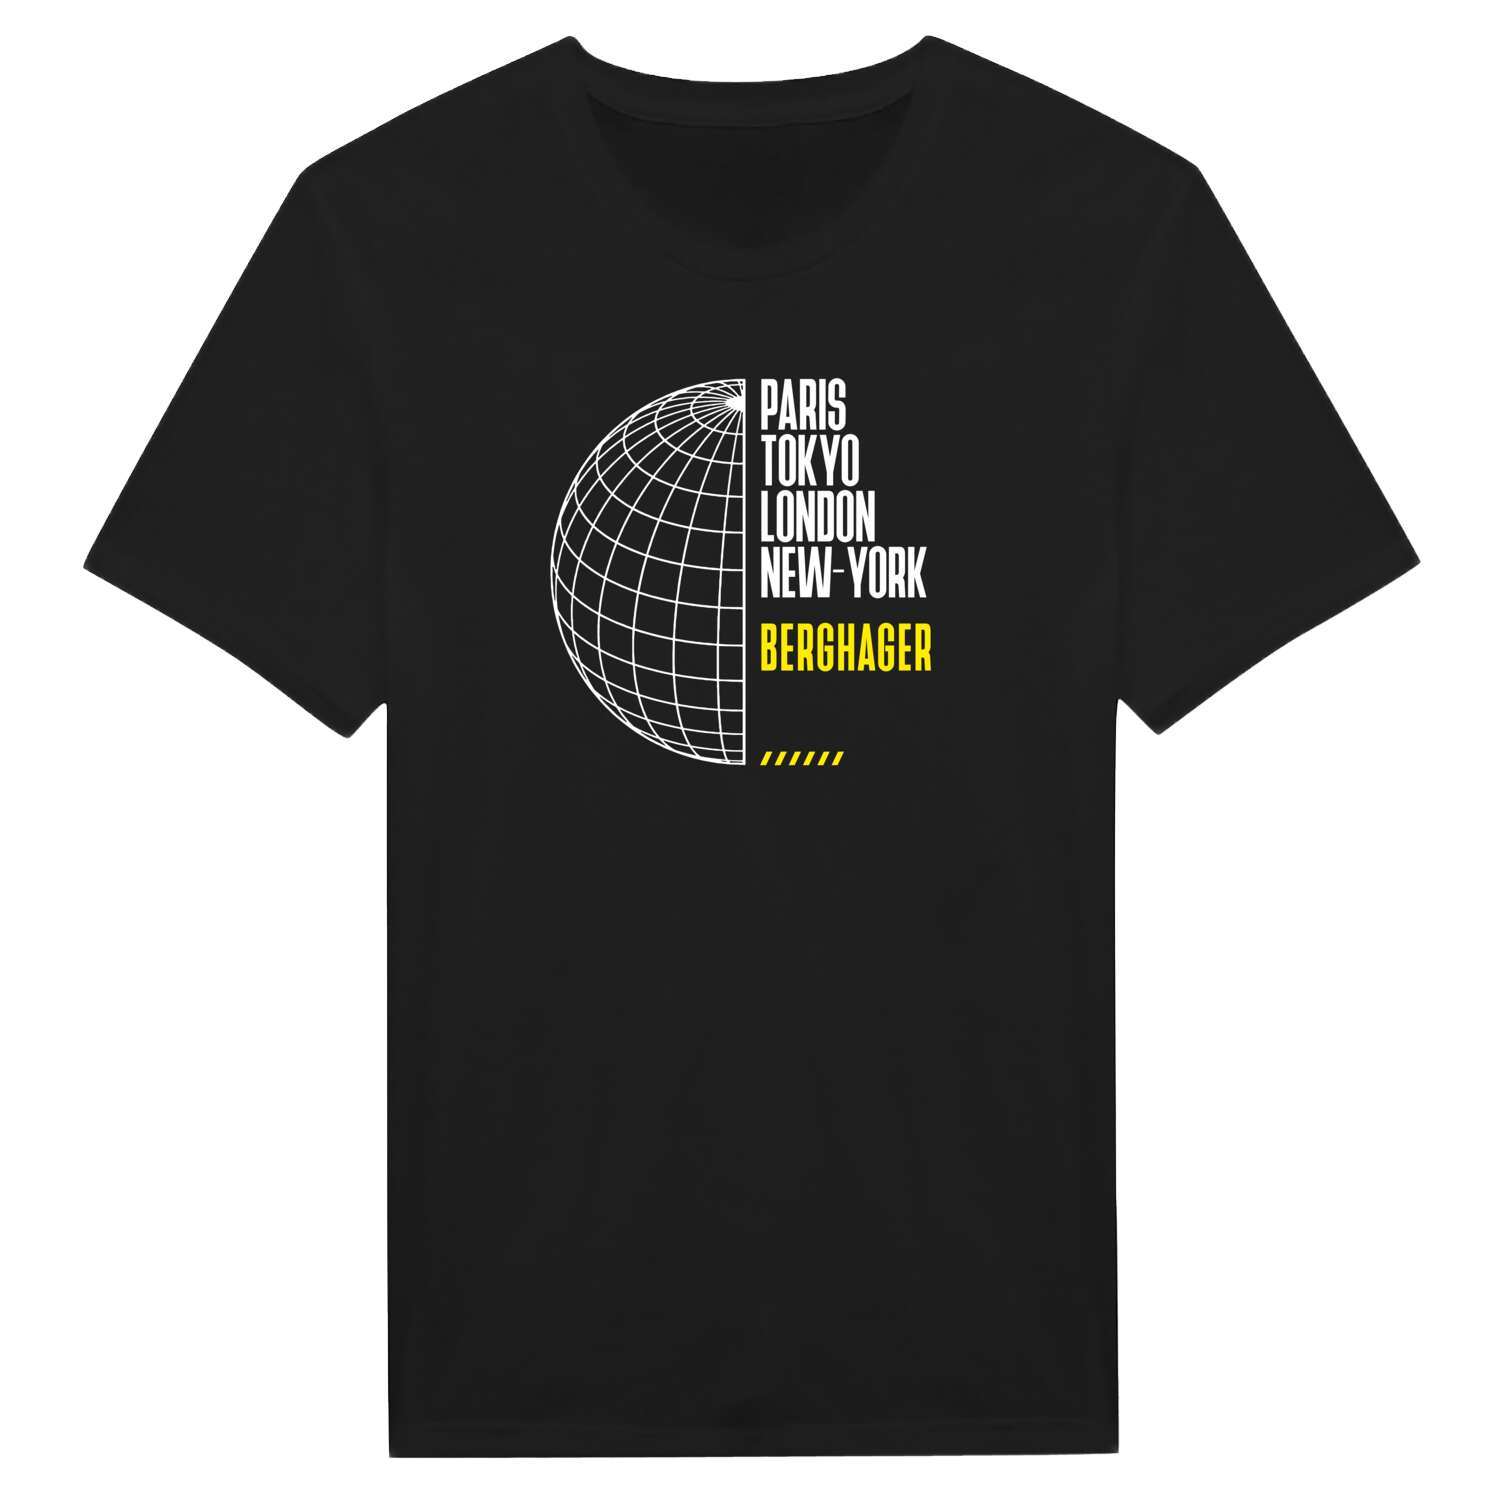 Berghager T-Shirt »Paris Tokyo London«